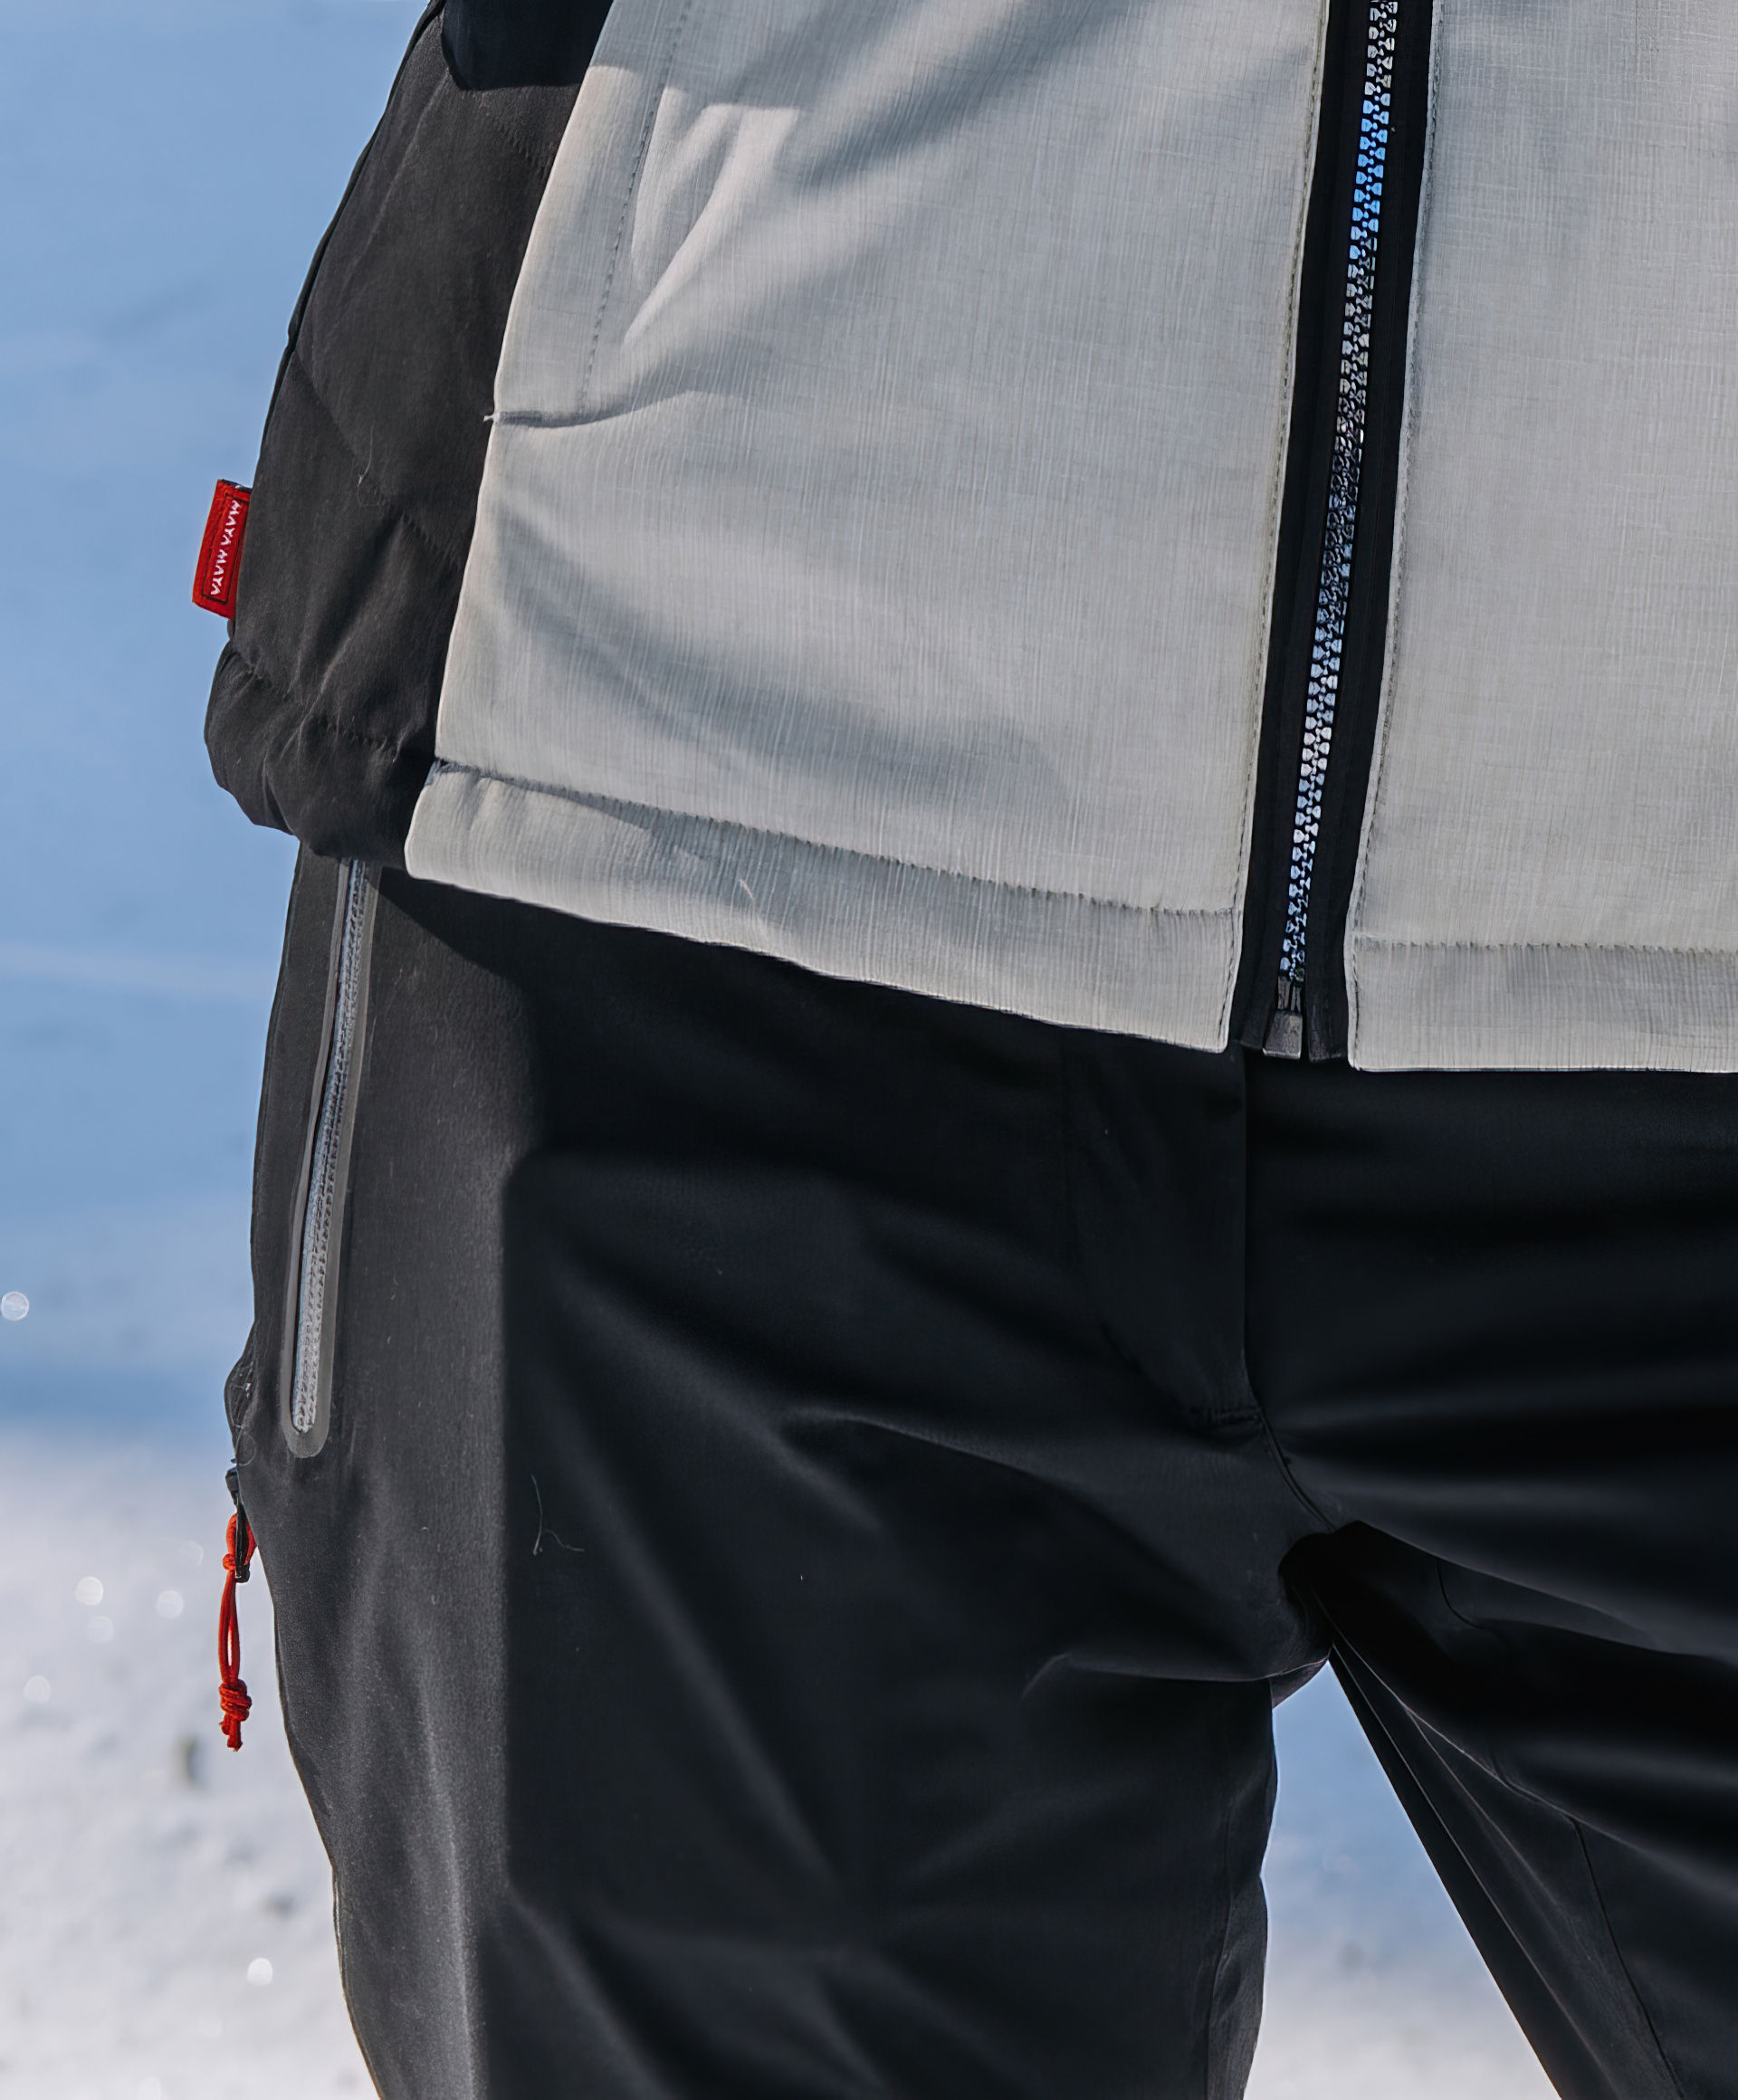 Shania pants black from MAYA MAYA are warm windproof ski pants for women